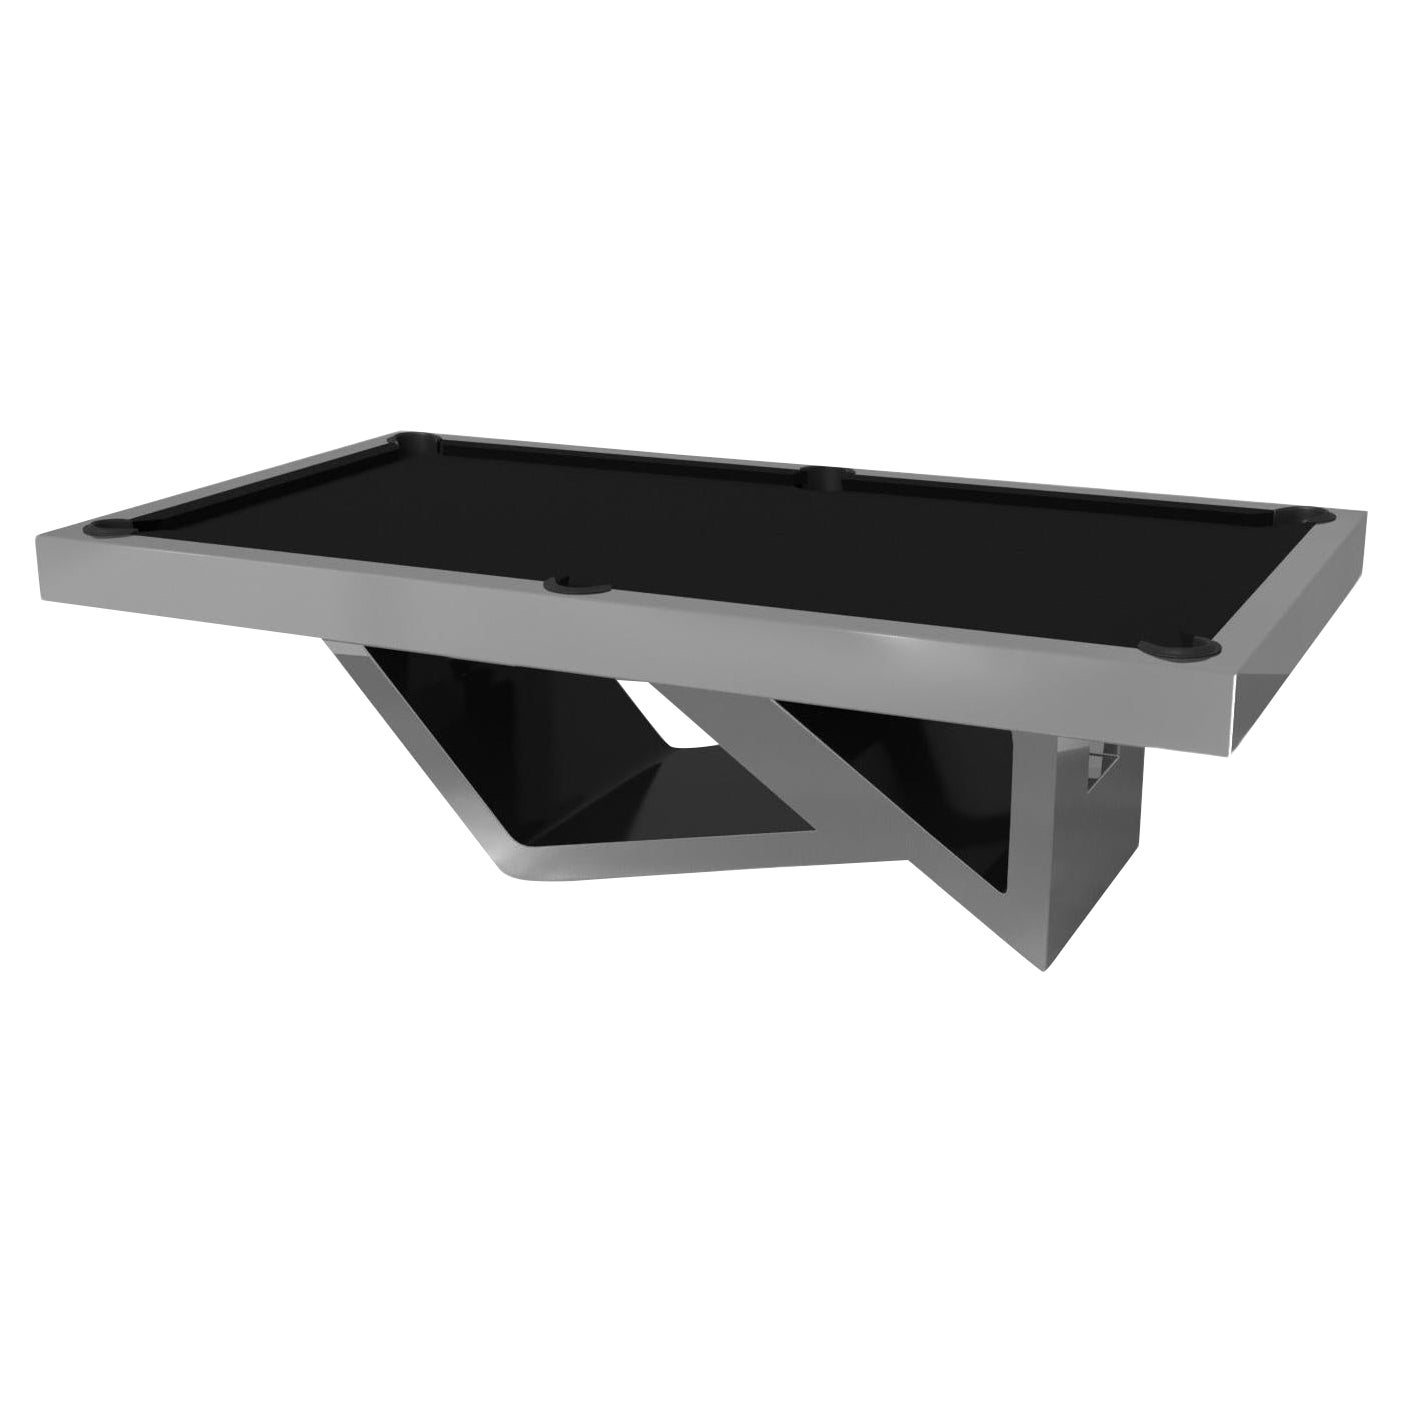 Elevate Customs Rumba Pool Table / Stainless Steel Metal in 8.5' - Made in USA